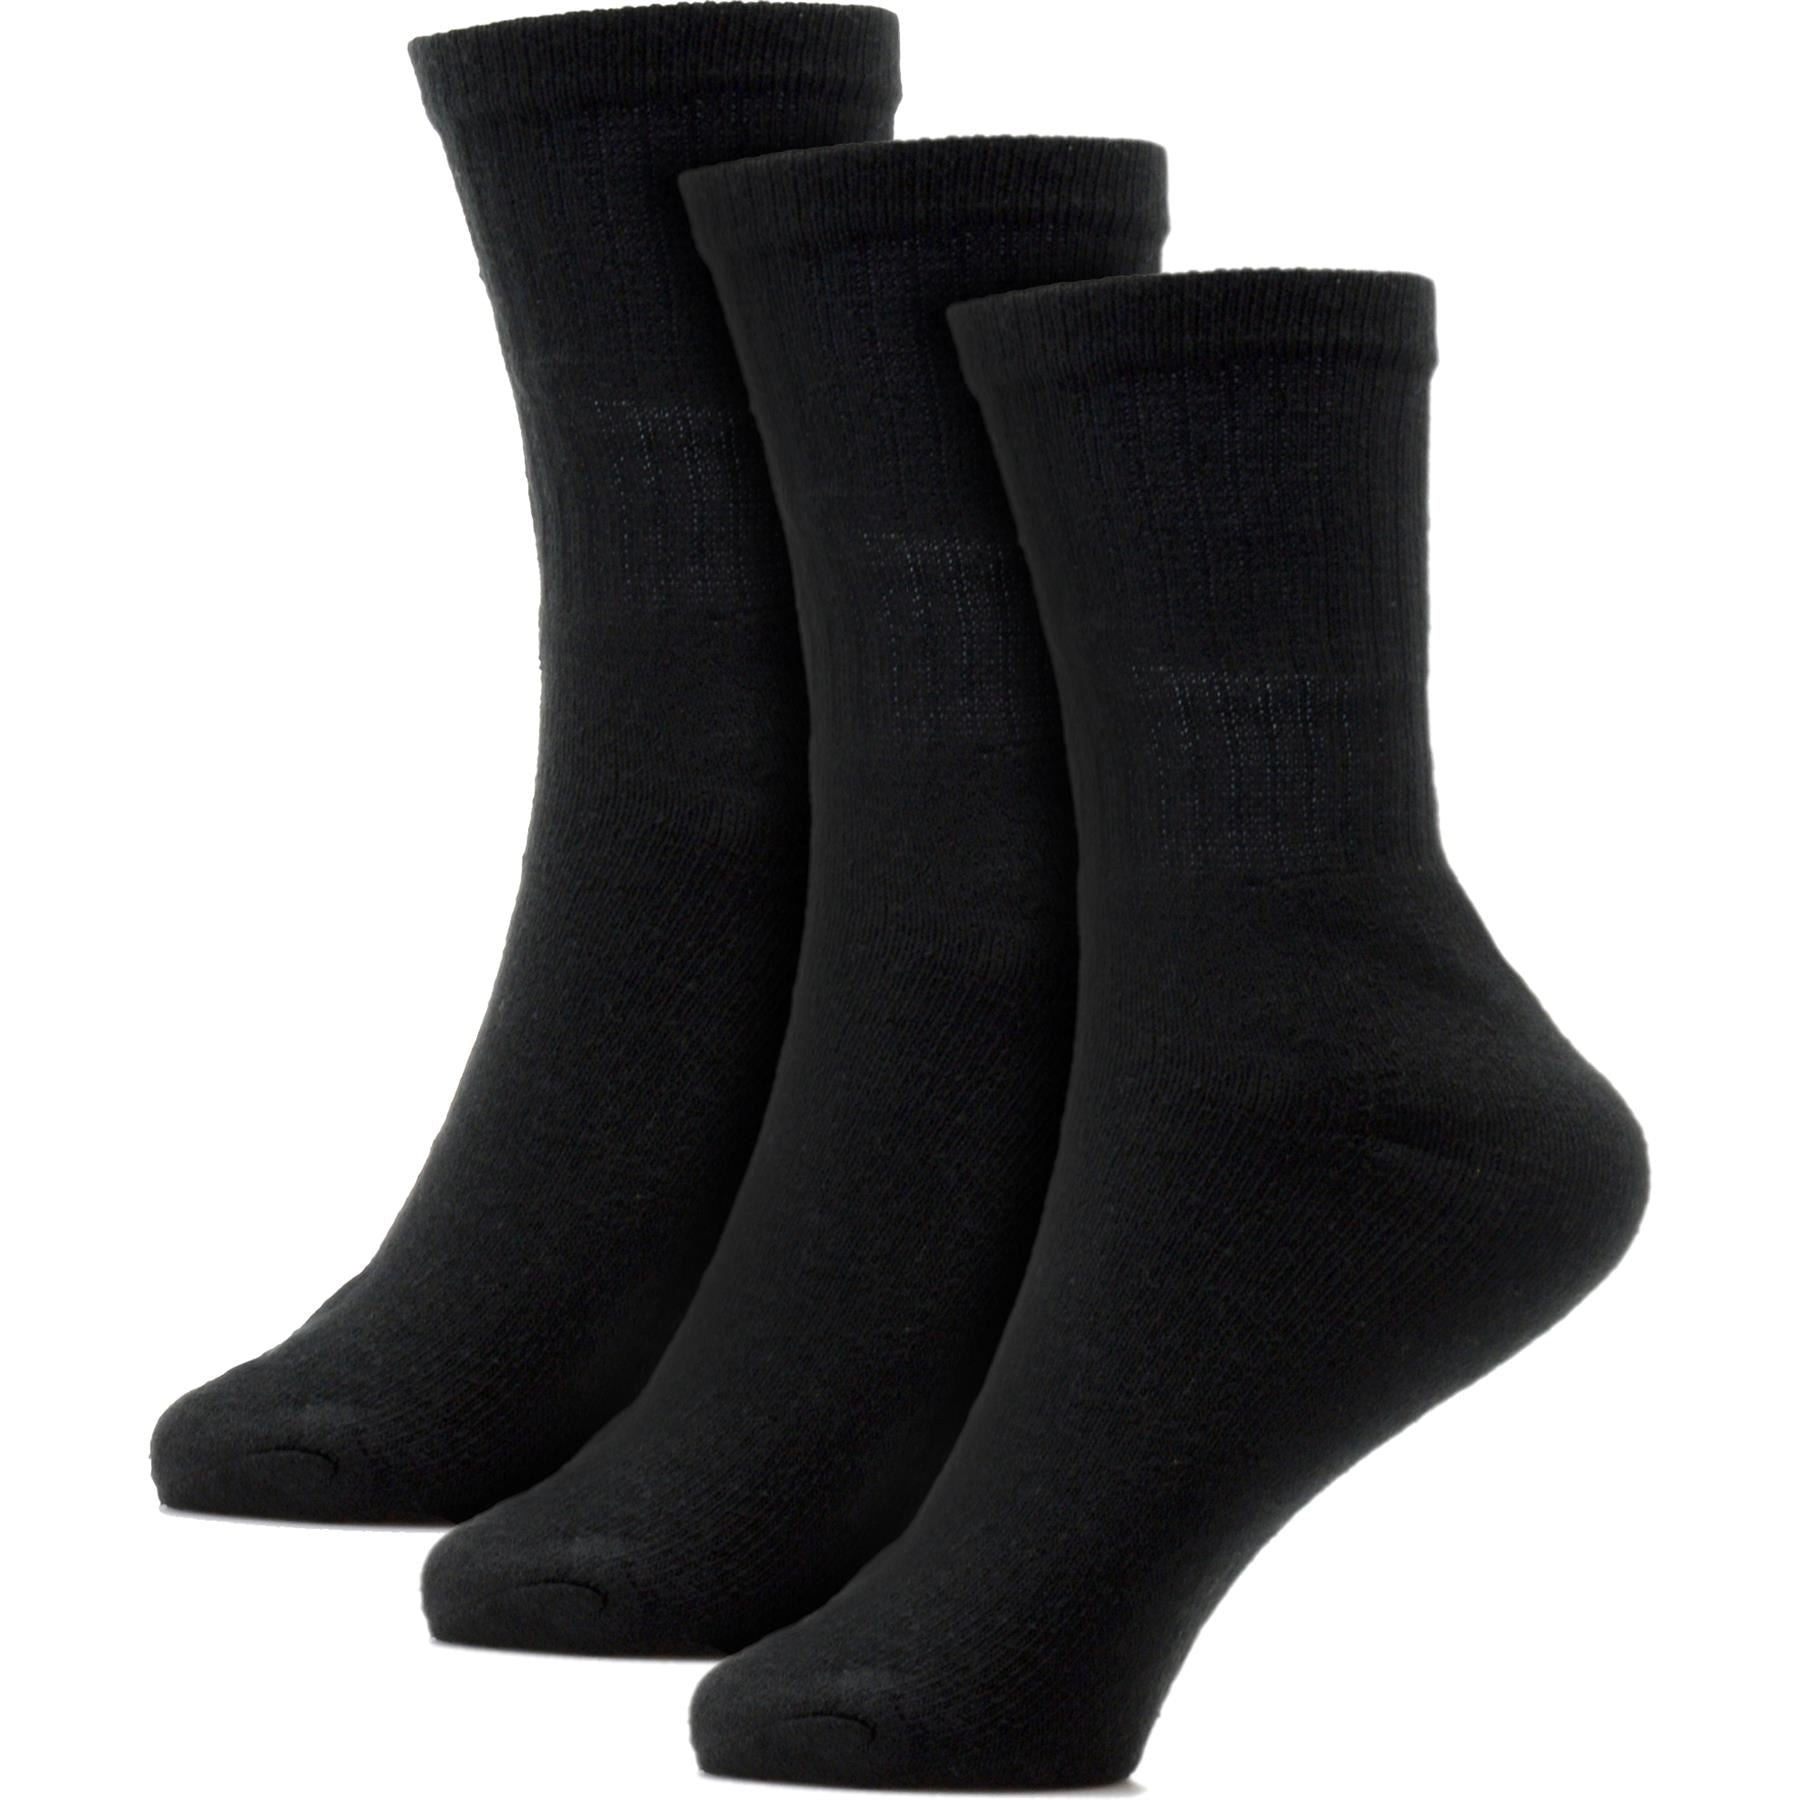 Kids Boys Sports Socks Durable Crew Athletic Soft Comfortable Pack Of 3 Socks